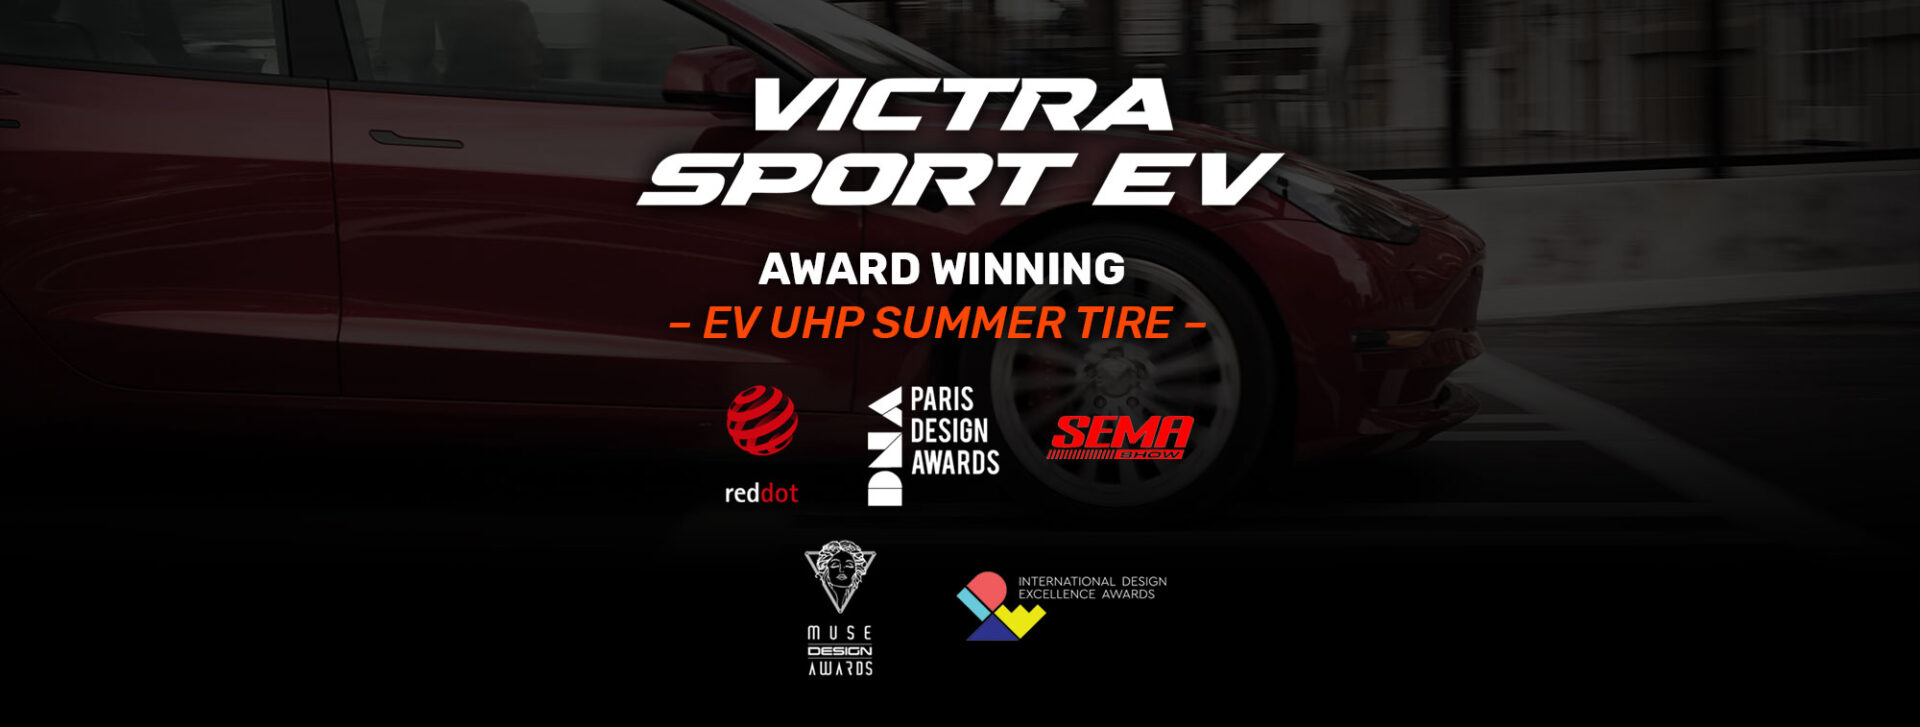 Victra Sport EV - Award Winning EV Summer UHP Tire